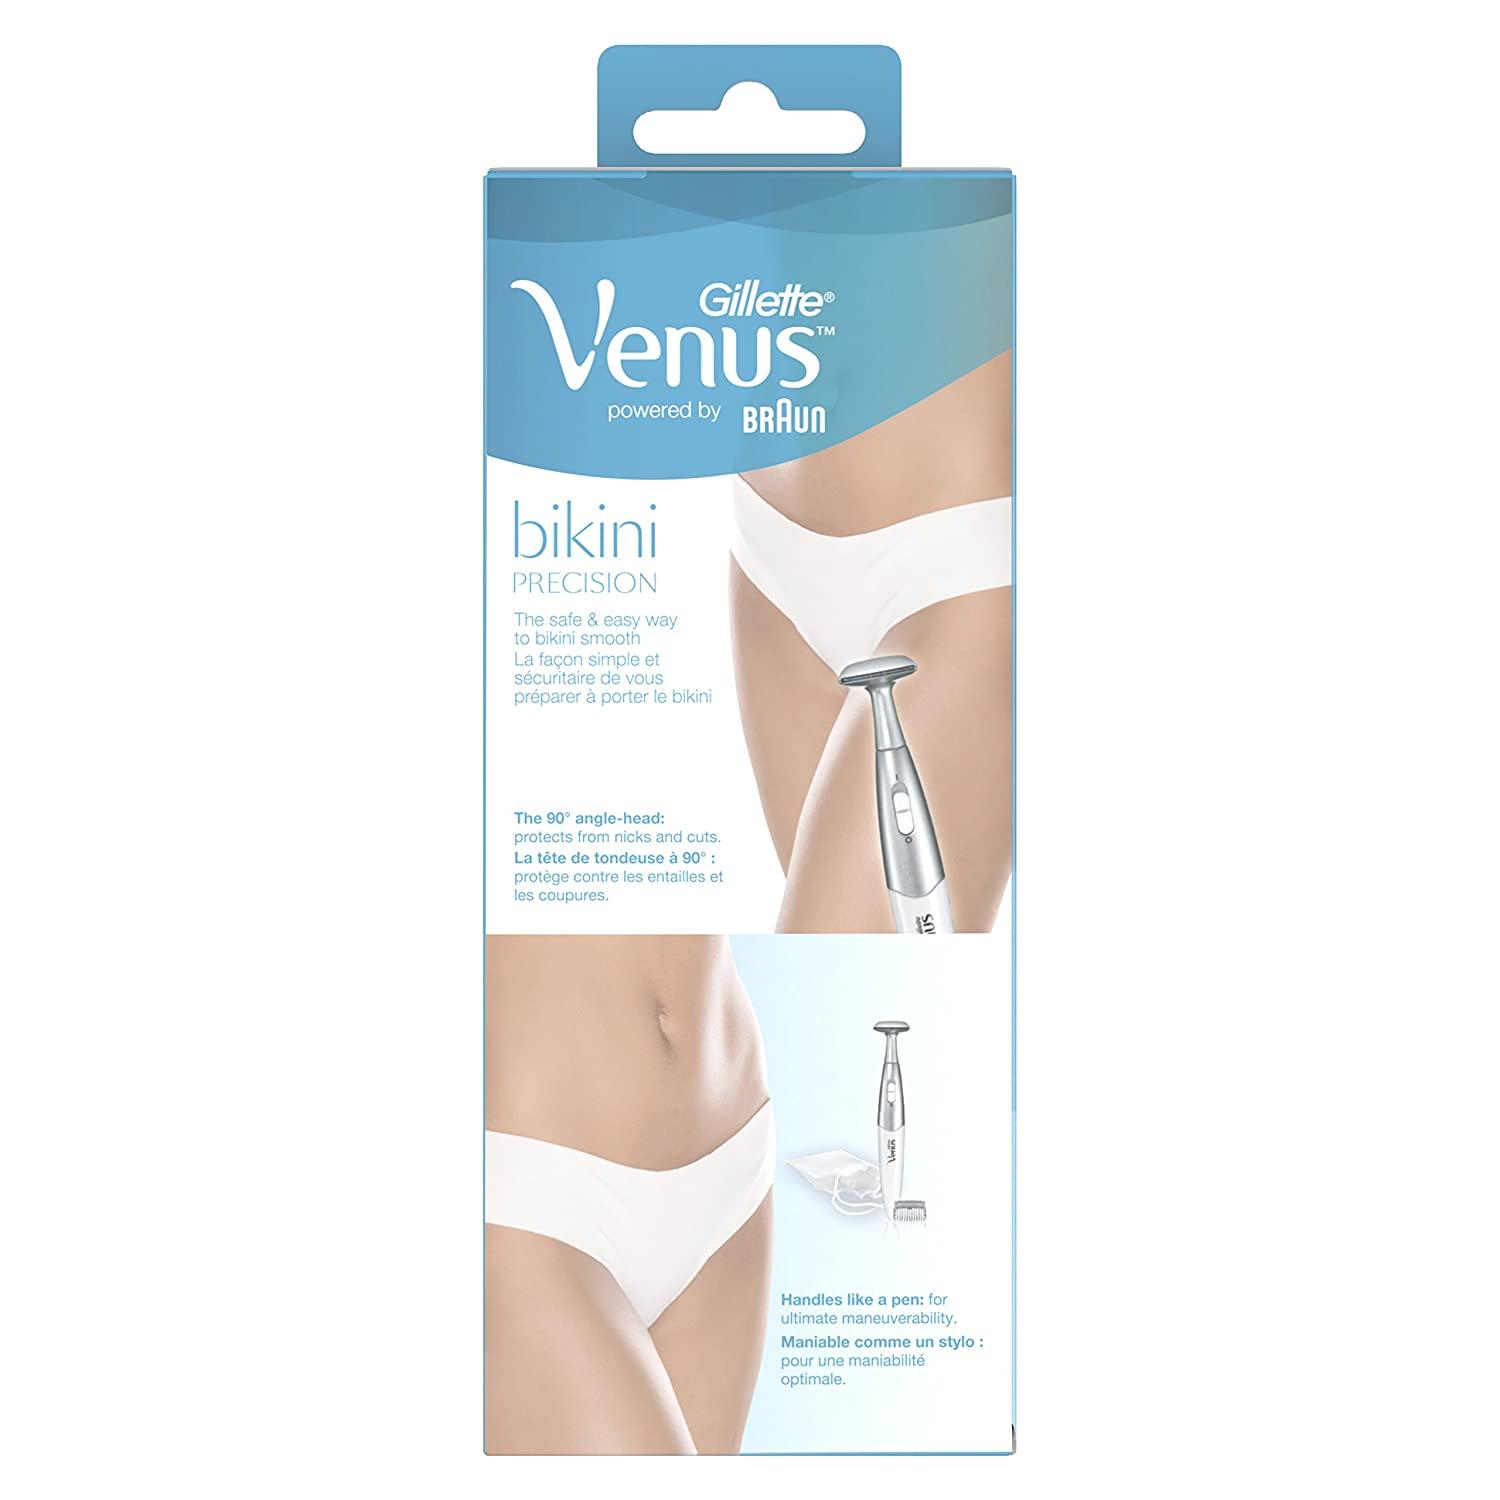 Venus bikini precision